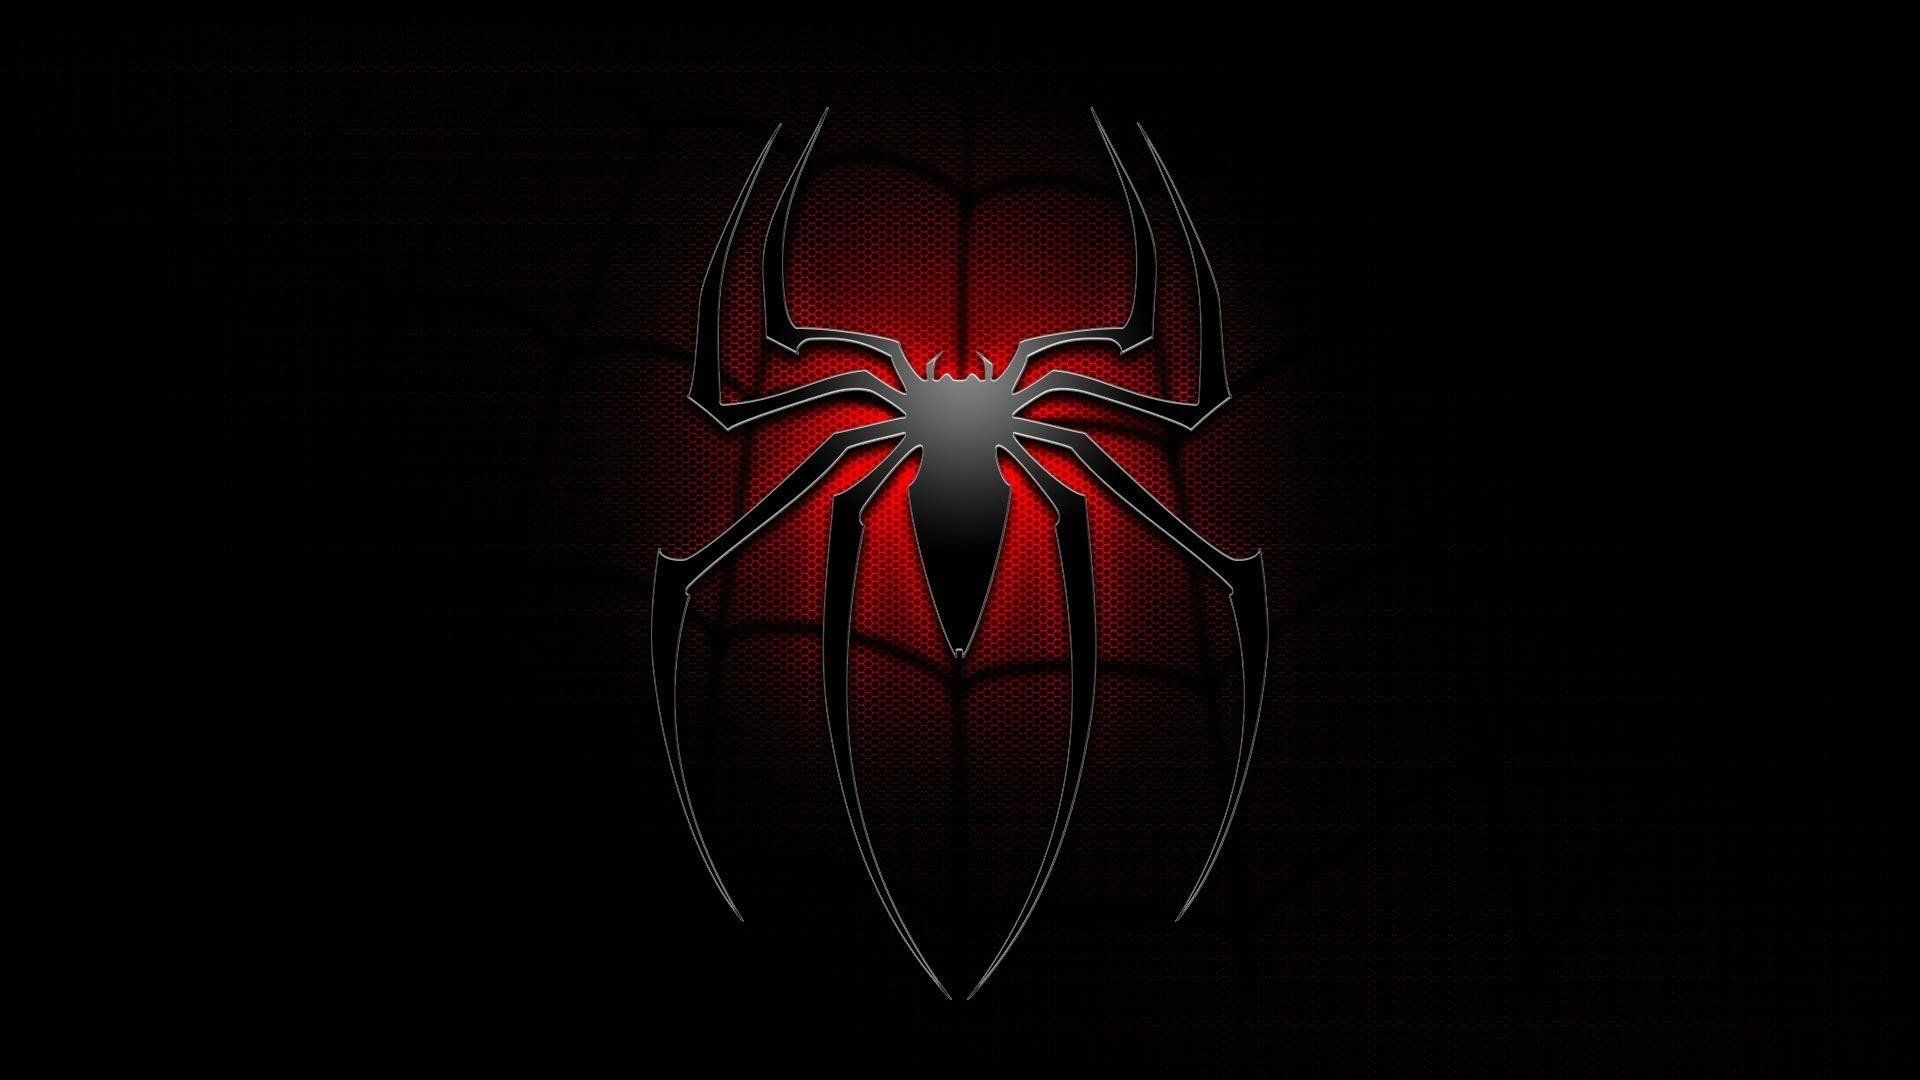 iPhone 7 Spiderman Logo Wallpaper